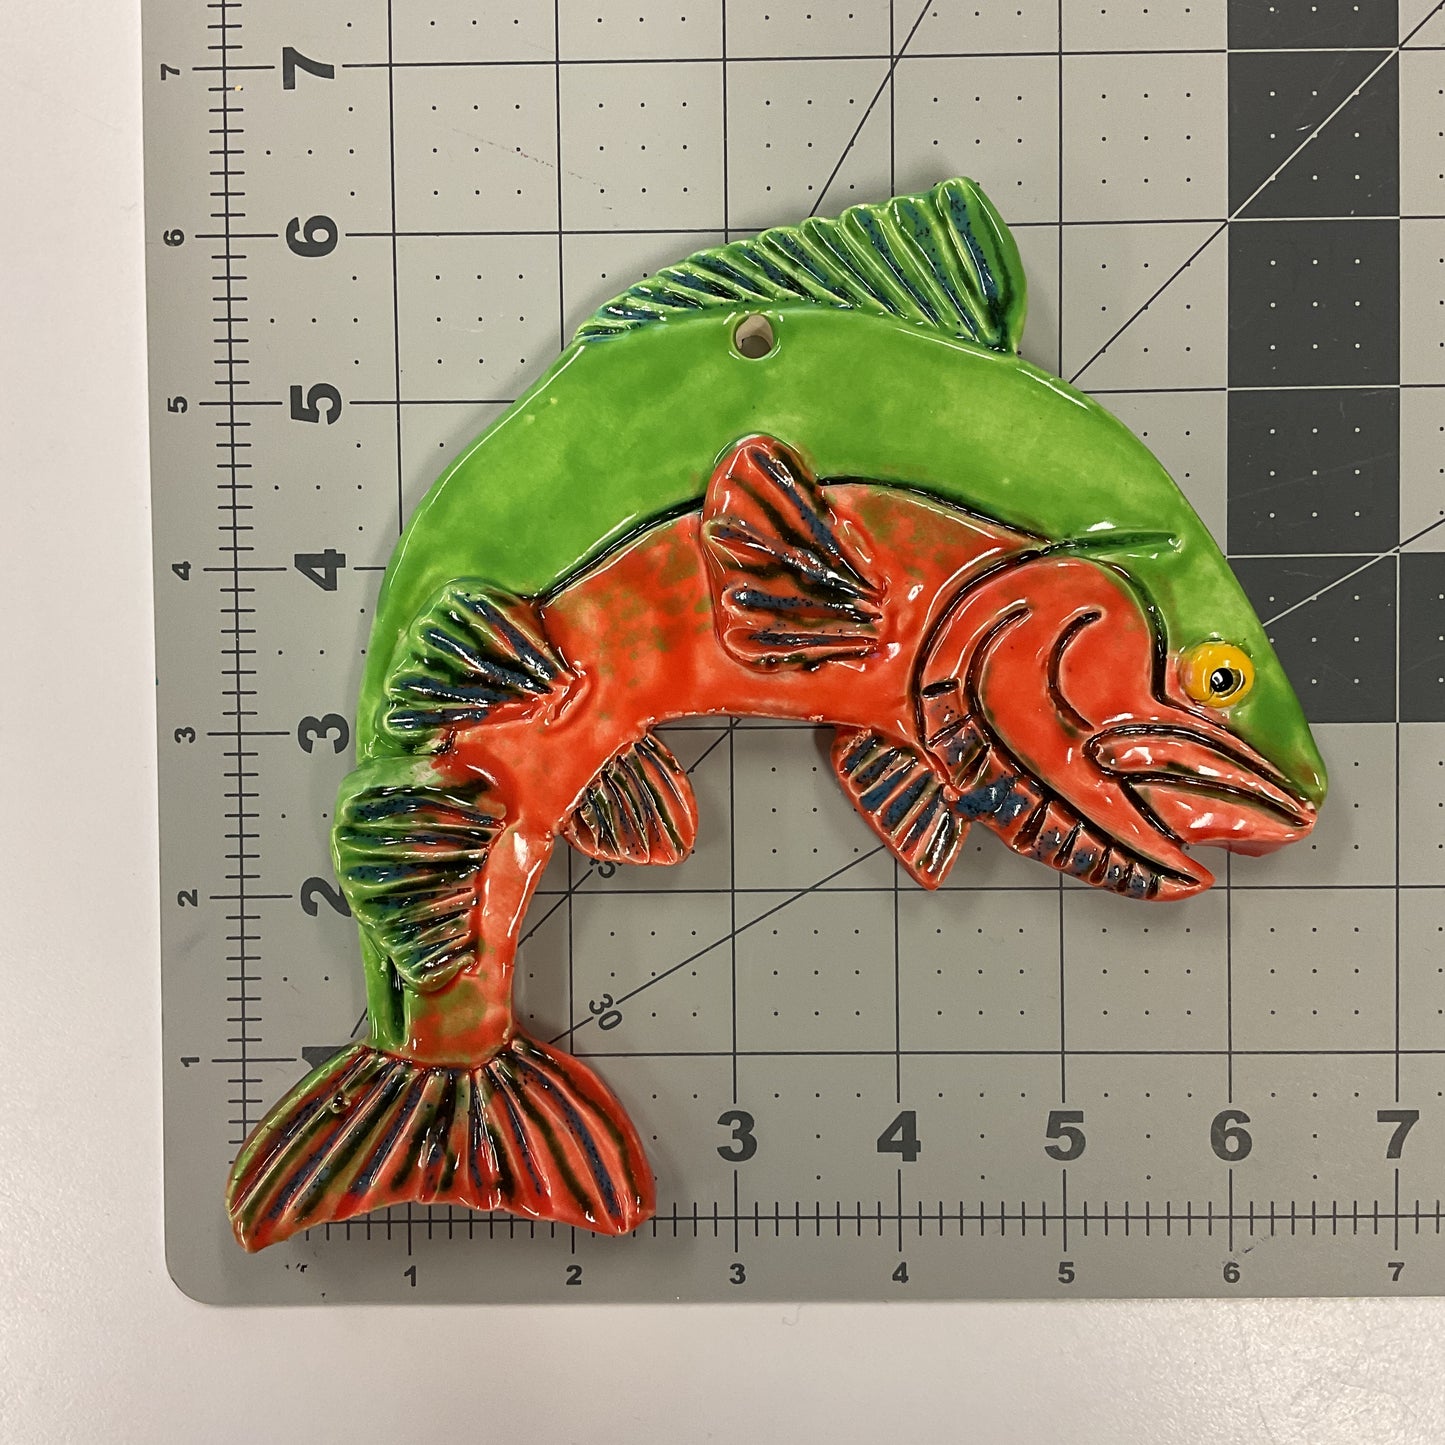 Ceramic Arts Handmade Clay Crafts Fresh Fish Glazed 6.5-inch x 6.5-inch made by Lisa Uptain